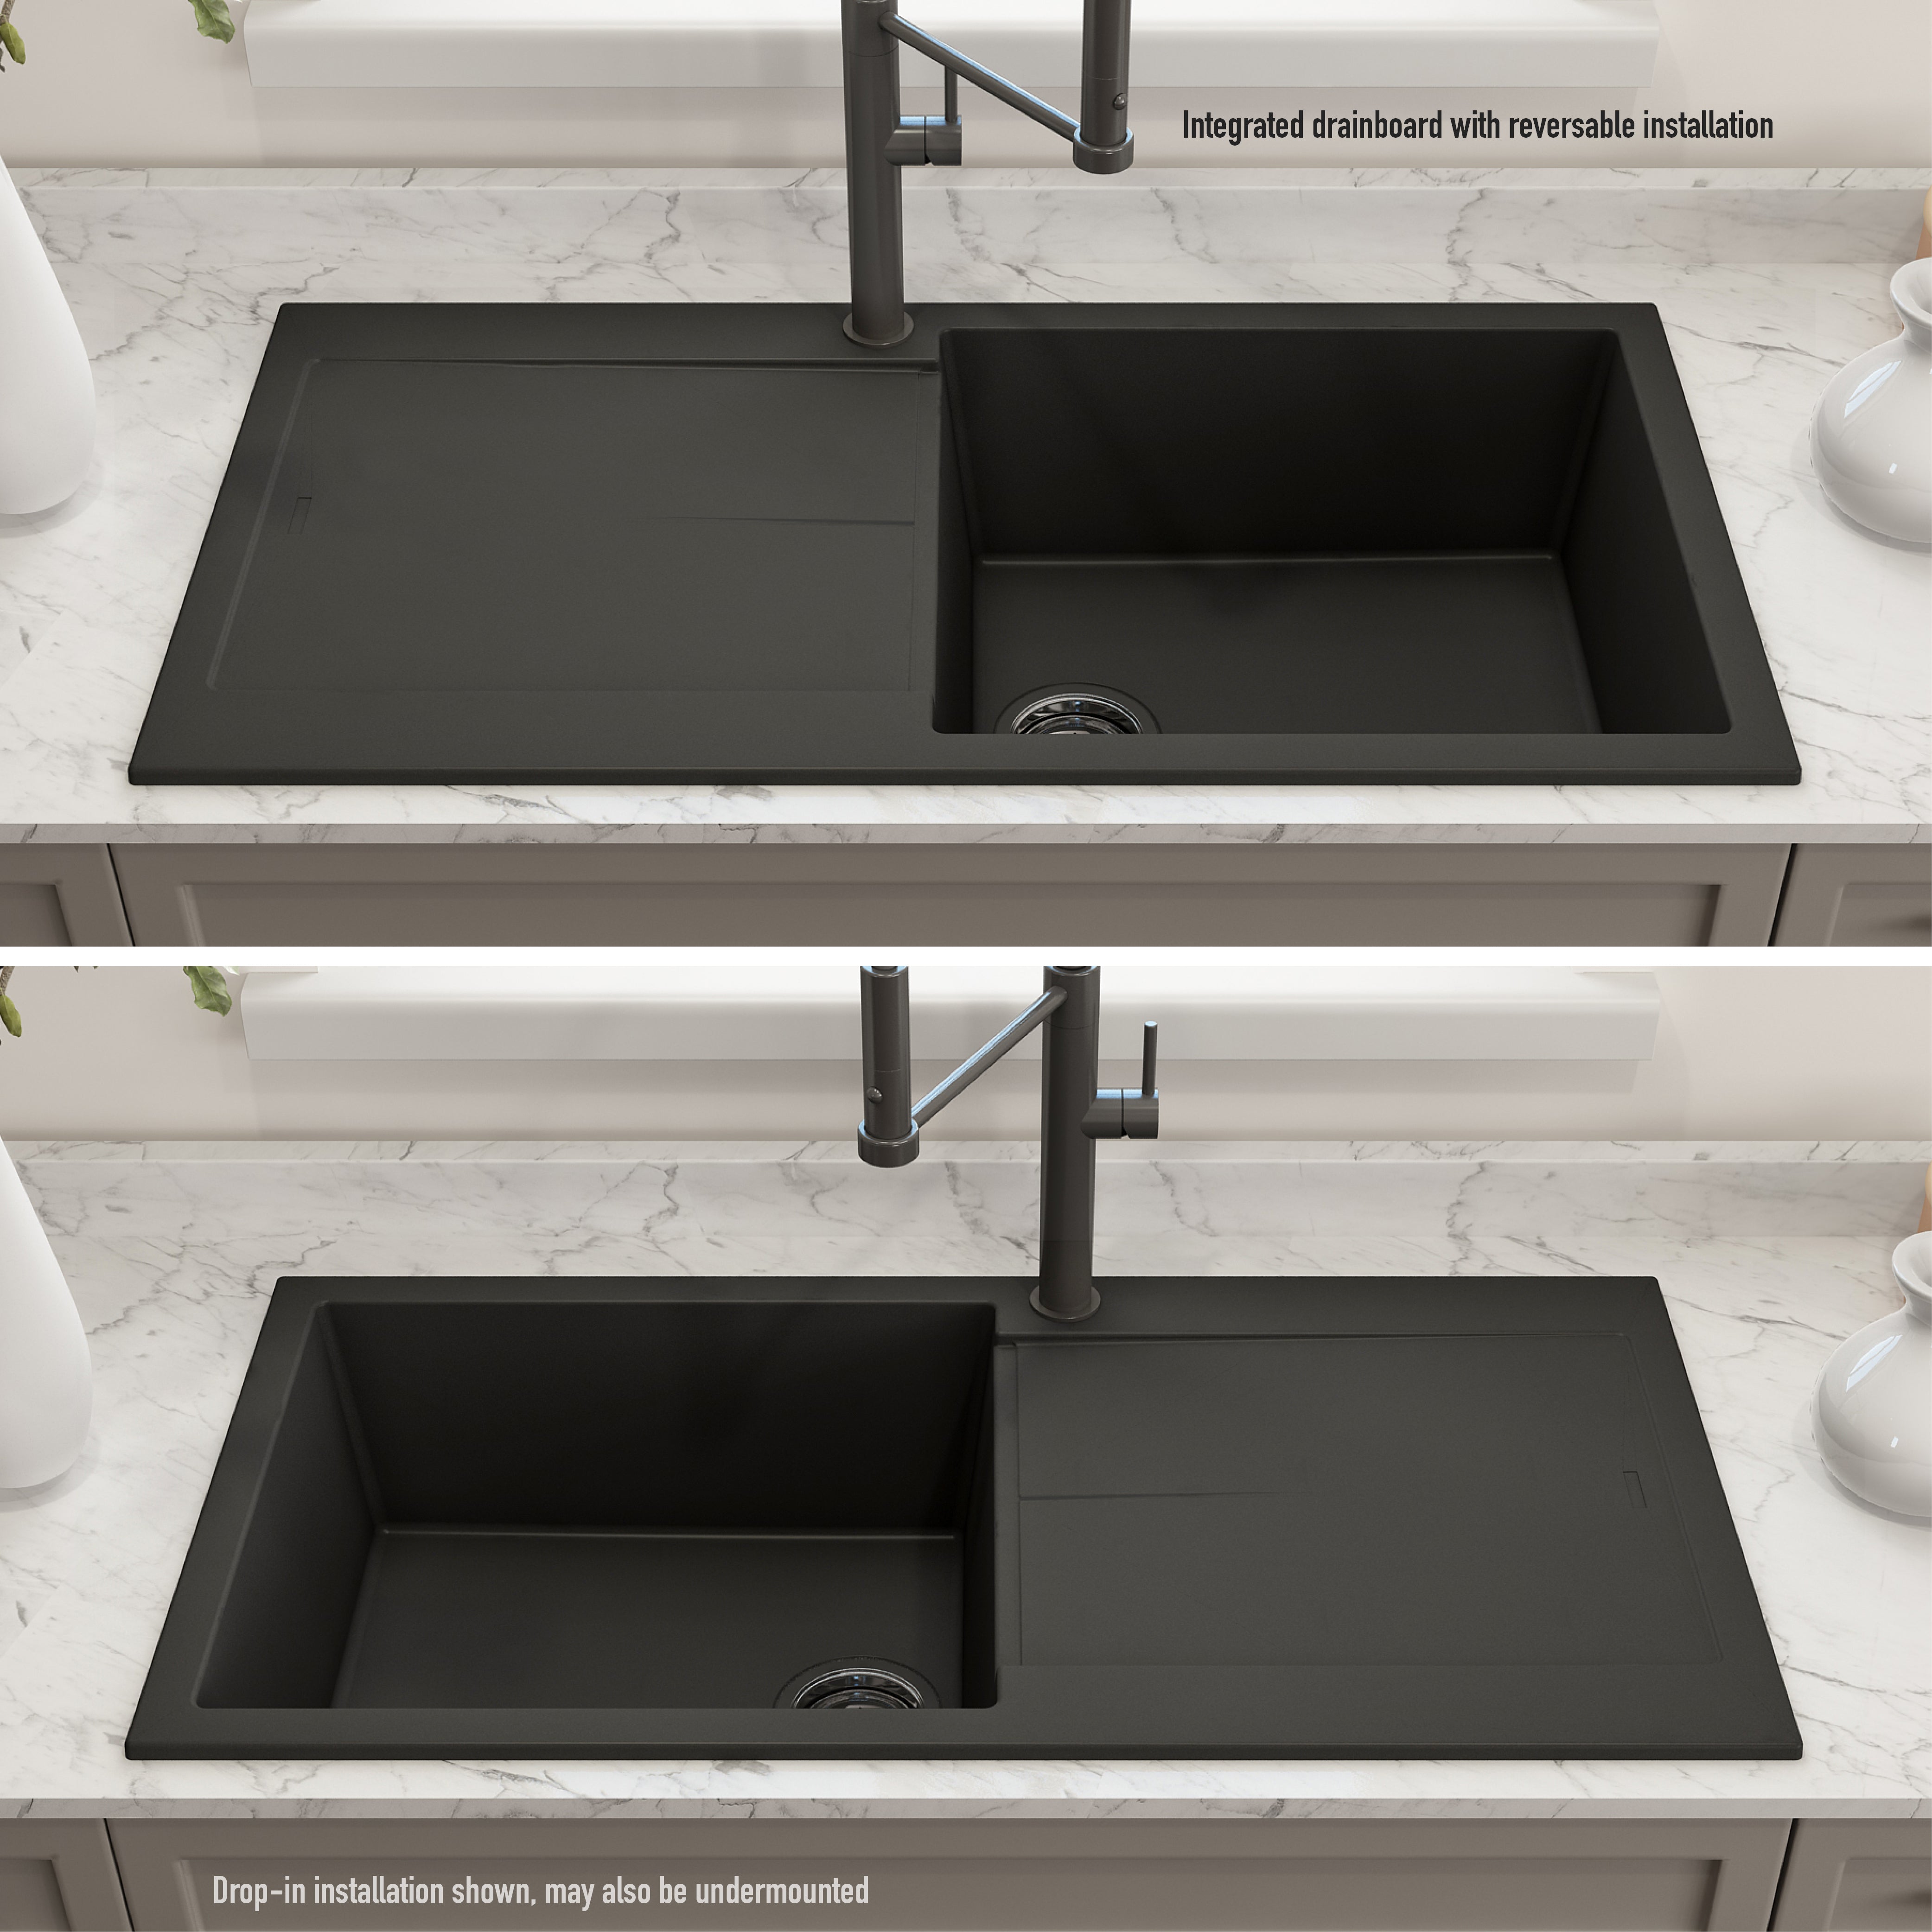 Bocchi 20" Dual-Mount Composite Kitchen Sink with Drain Board in Matte Black